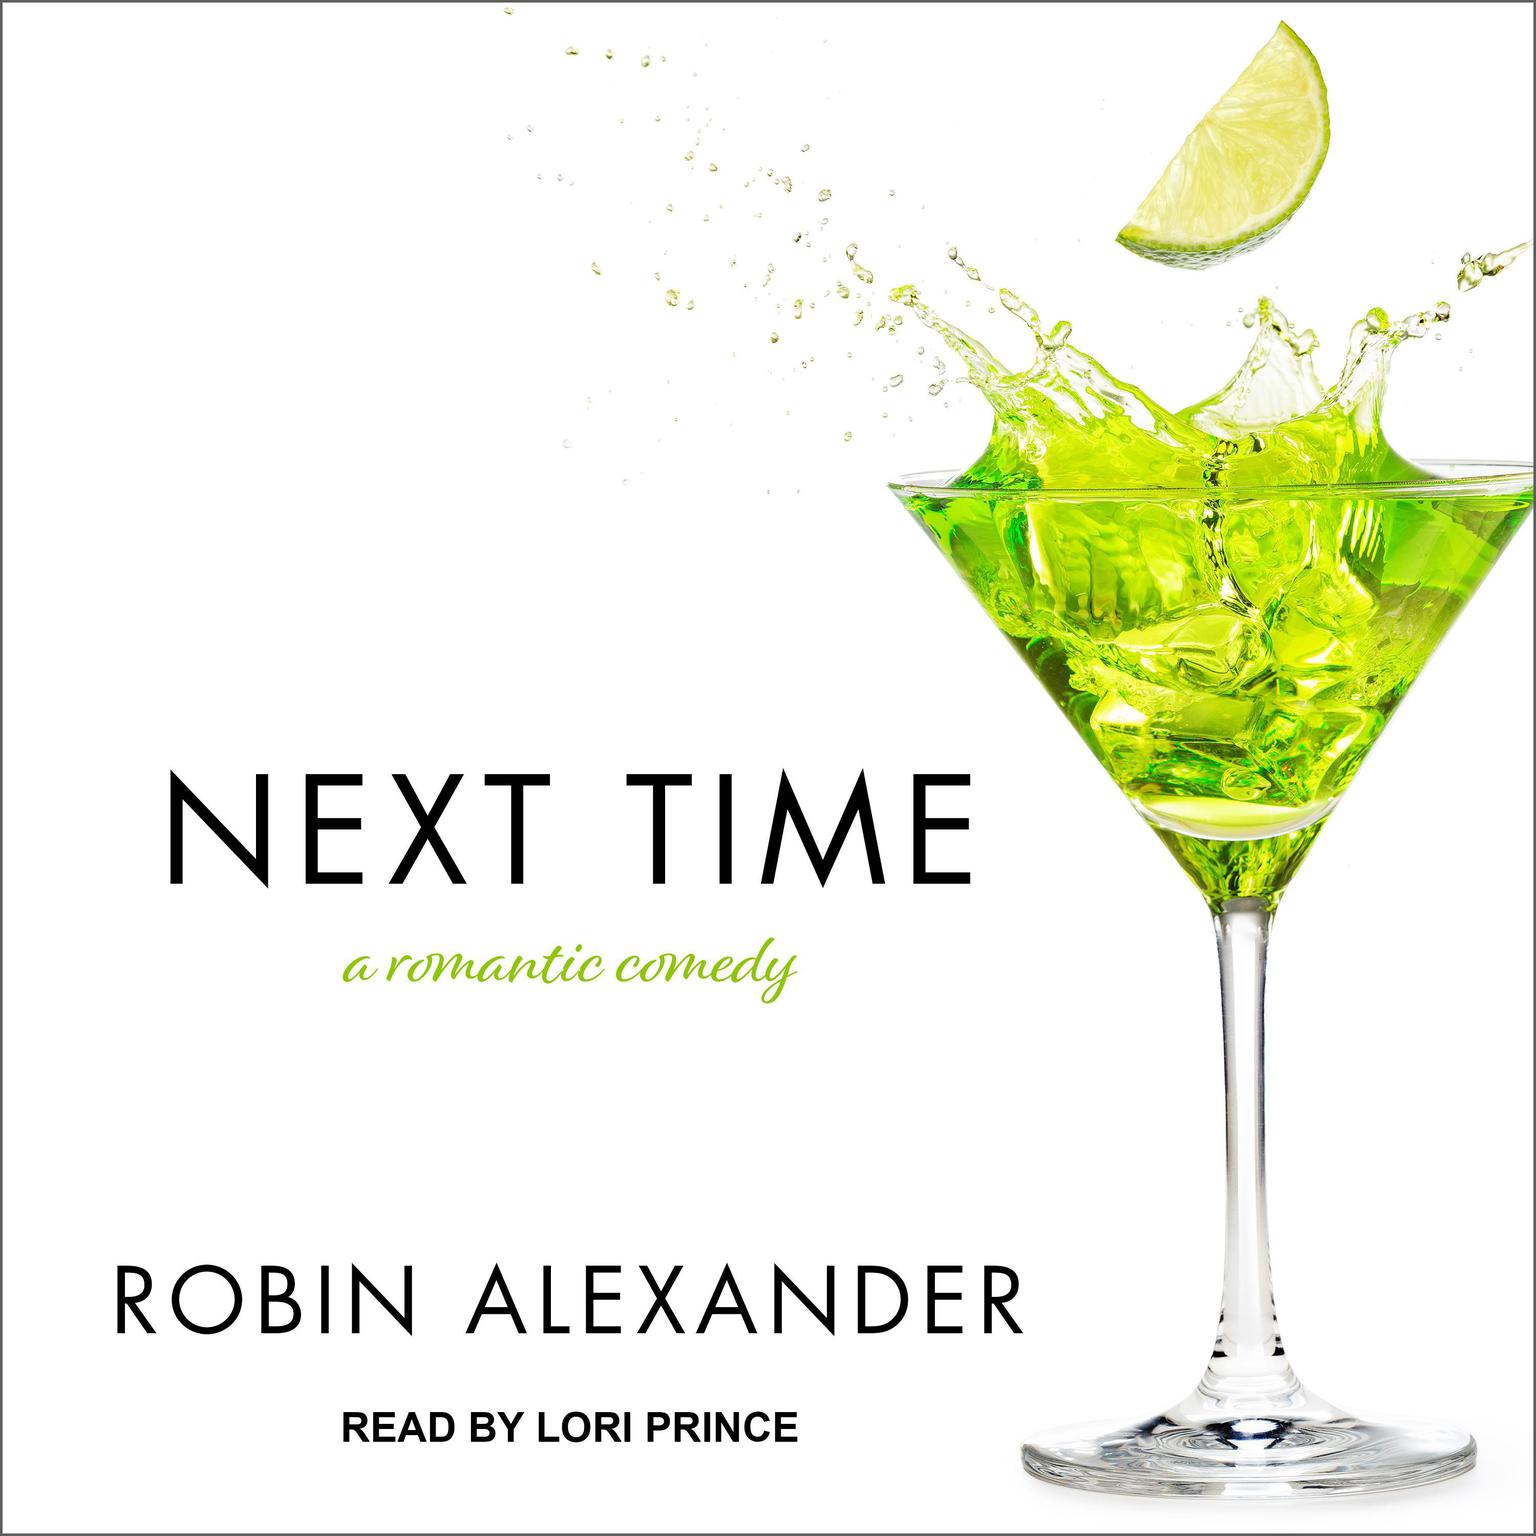 Robin Alexander: Next Time (AudiobookFormat, 2015, Intaglio)